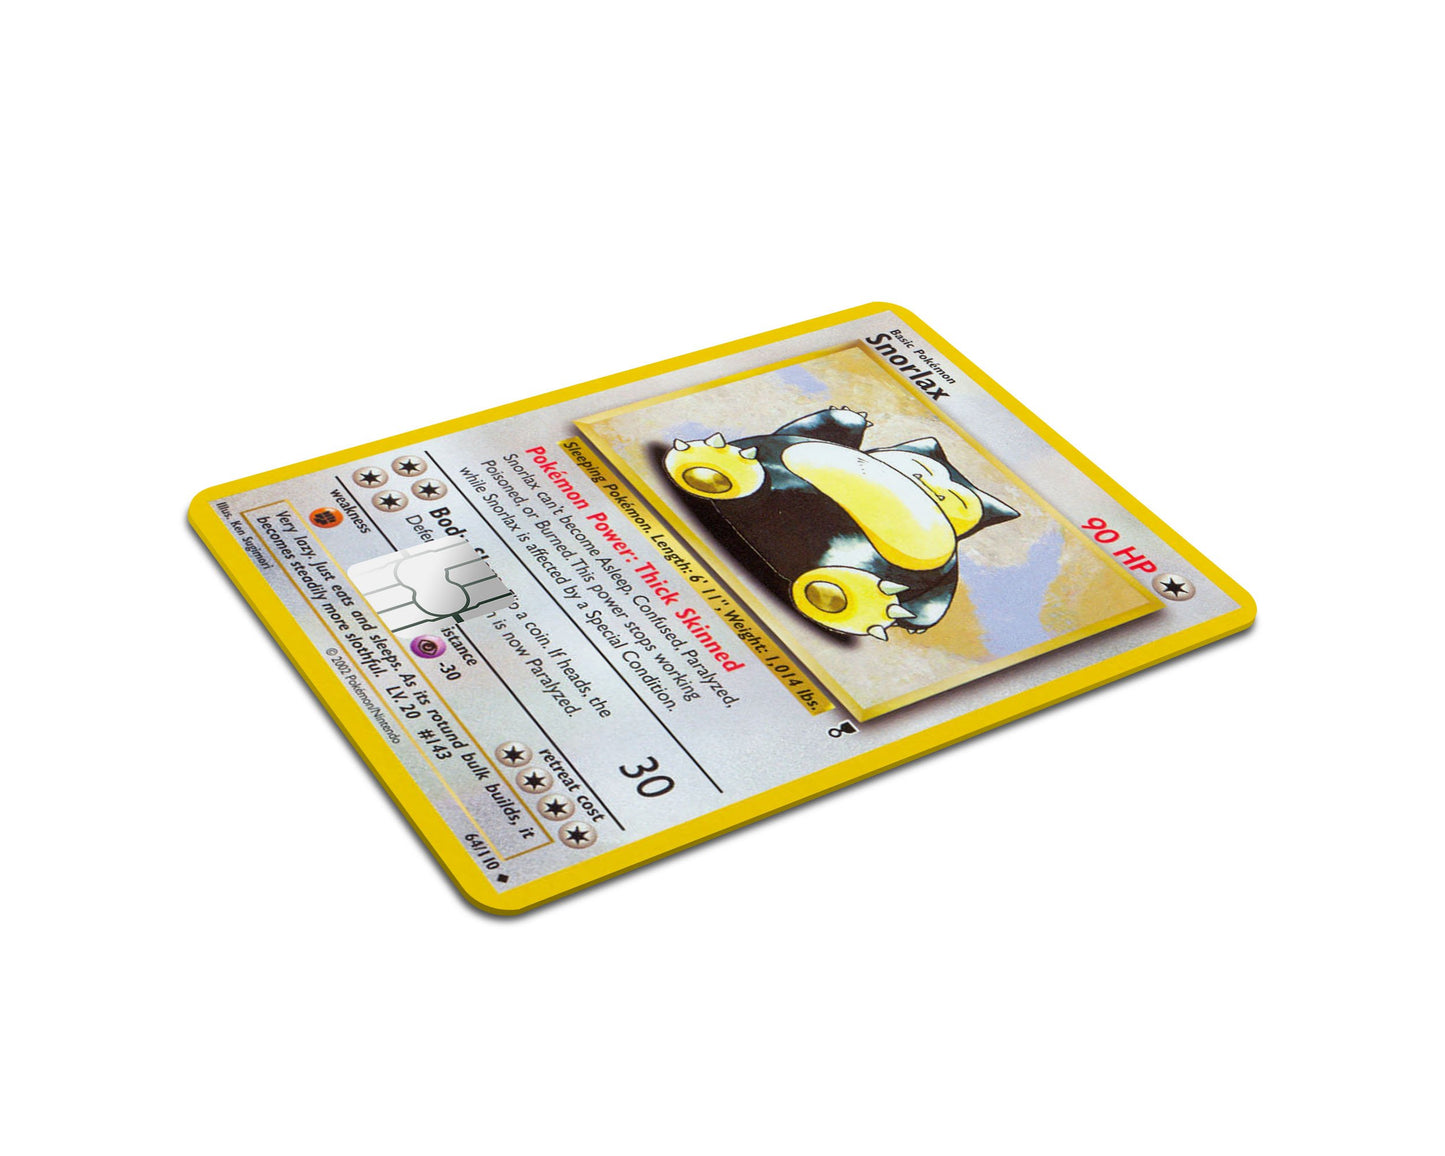 Anime Town Creations Credit Card Snorlax Pokemon Card Full Skins - Anime Pokemon Skin